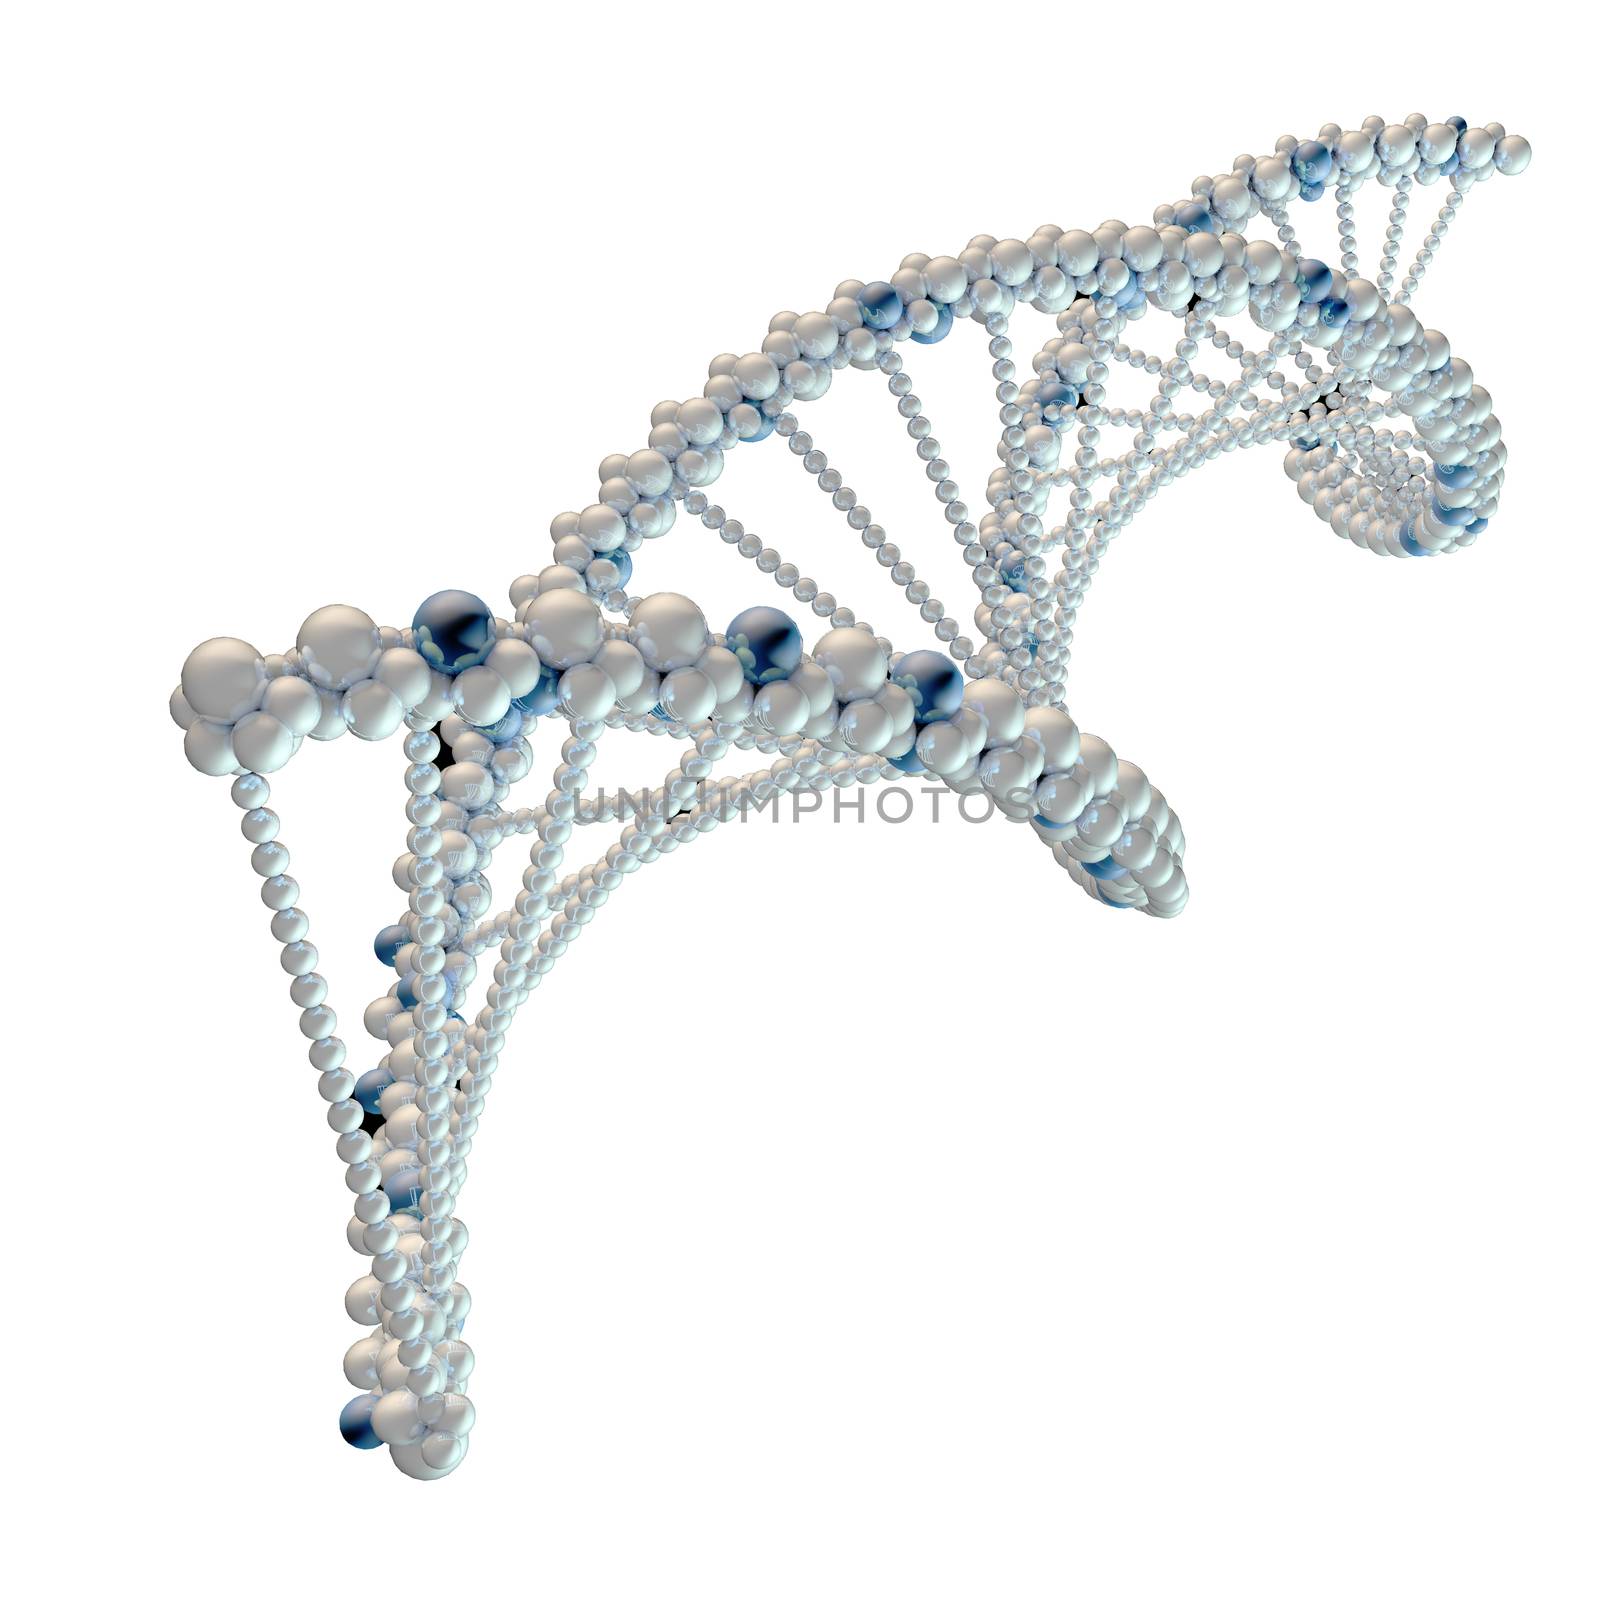 Illustration of white DNA chain by cherezoff